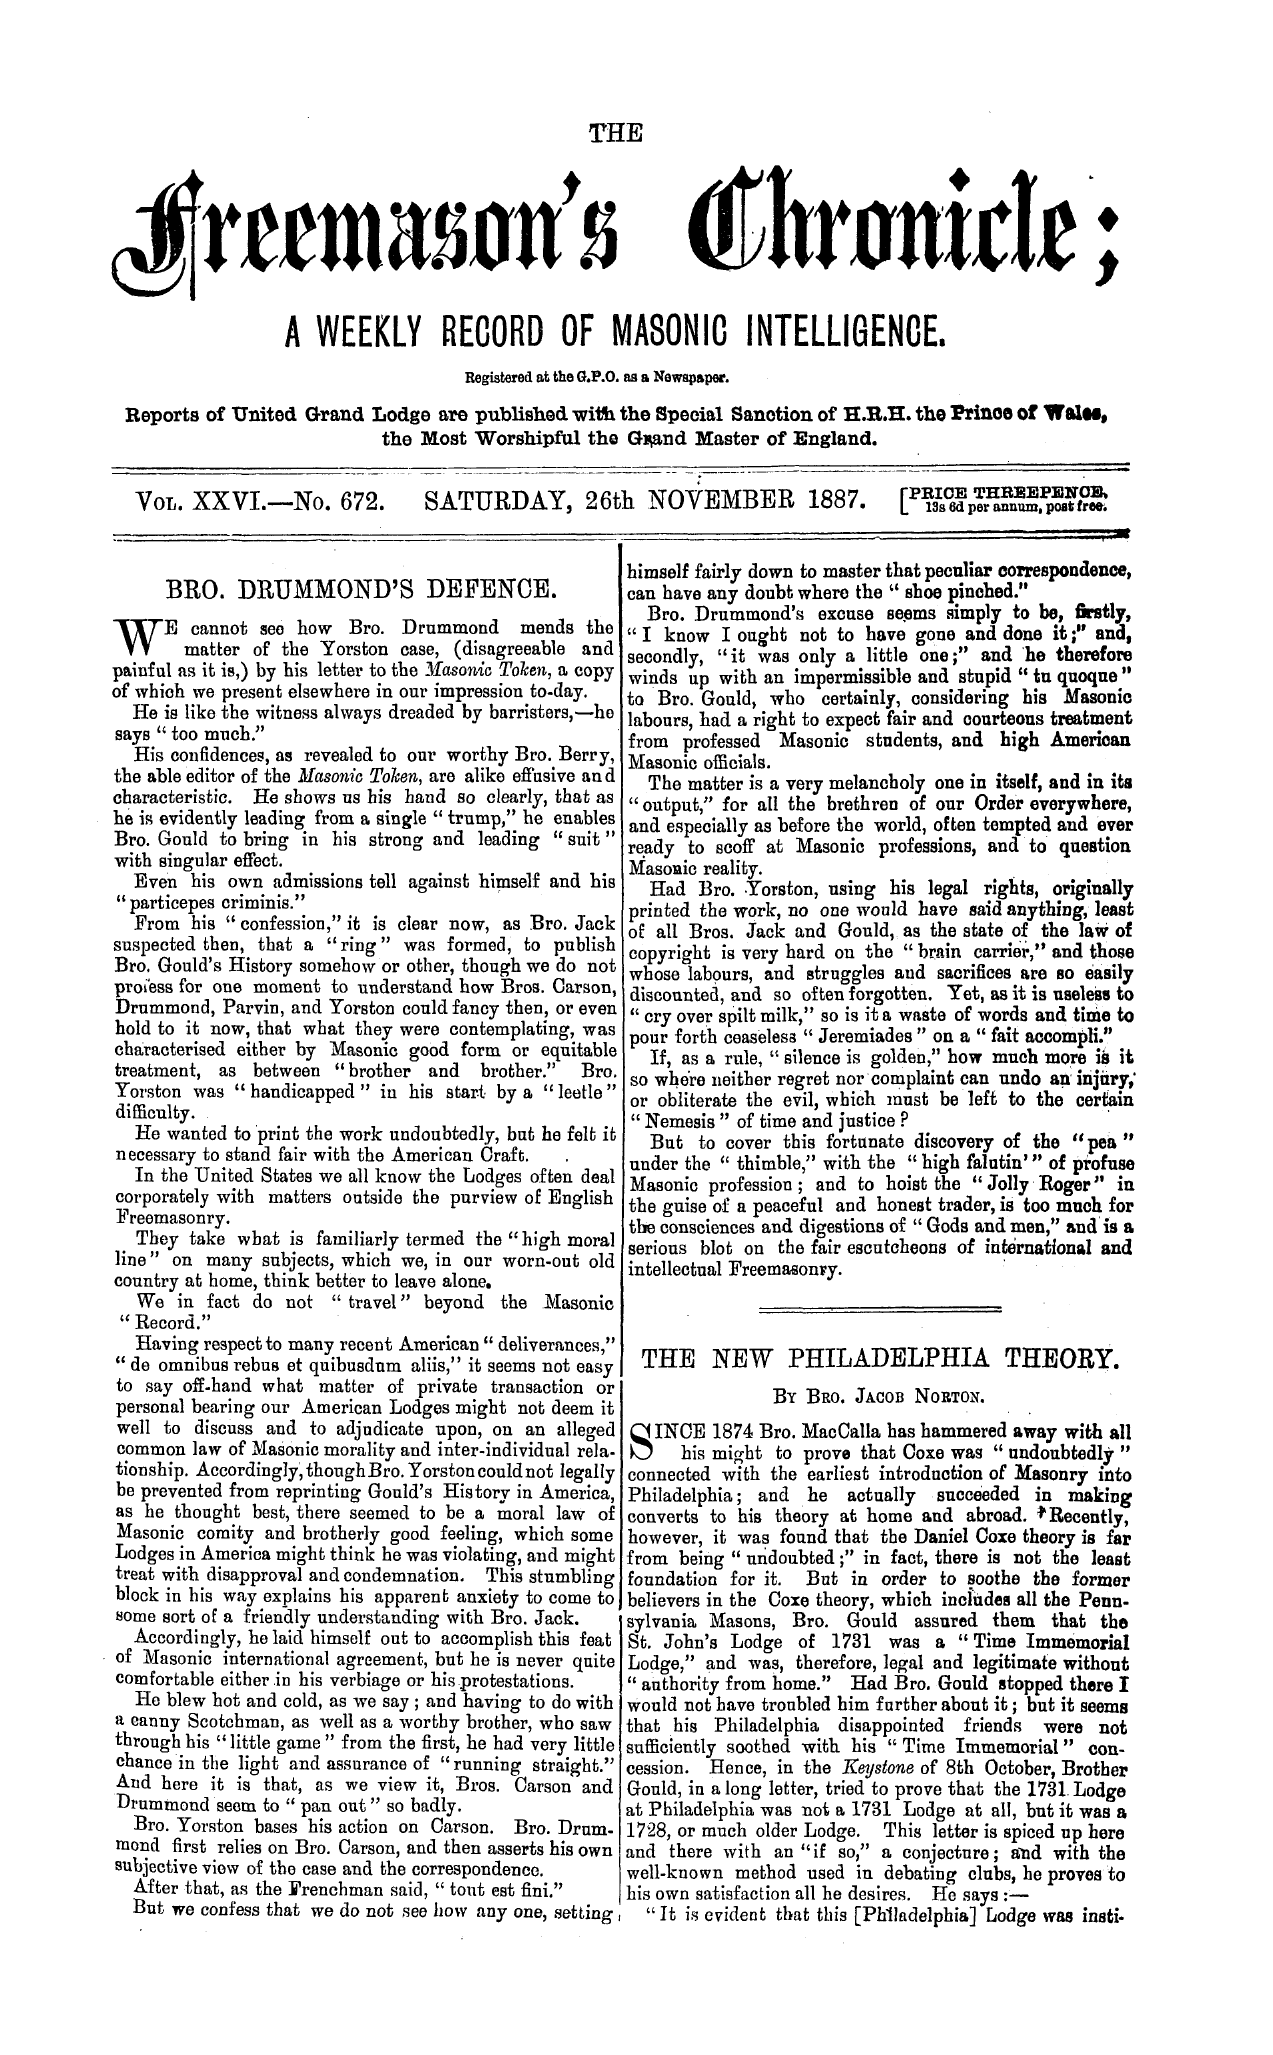 The Freemason's Chronicle: 1887-11-26 - The New Philadelphia Theory.